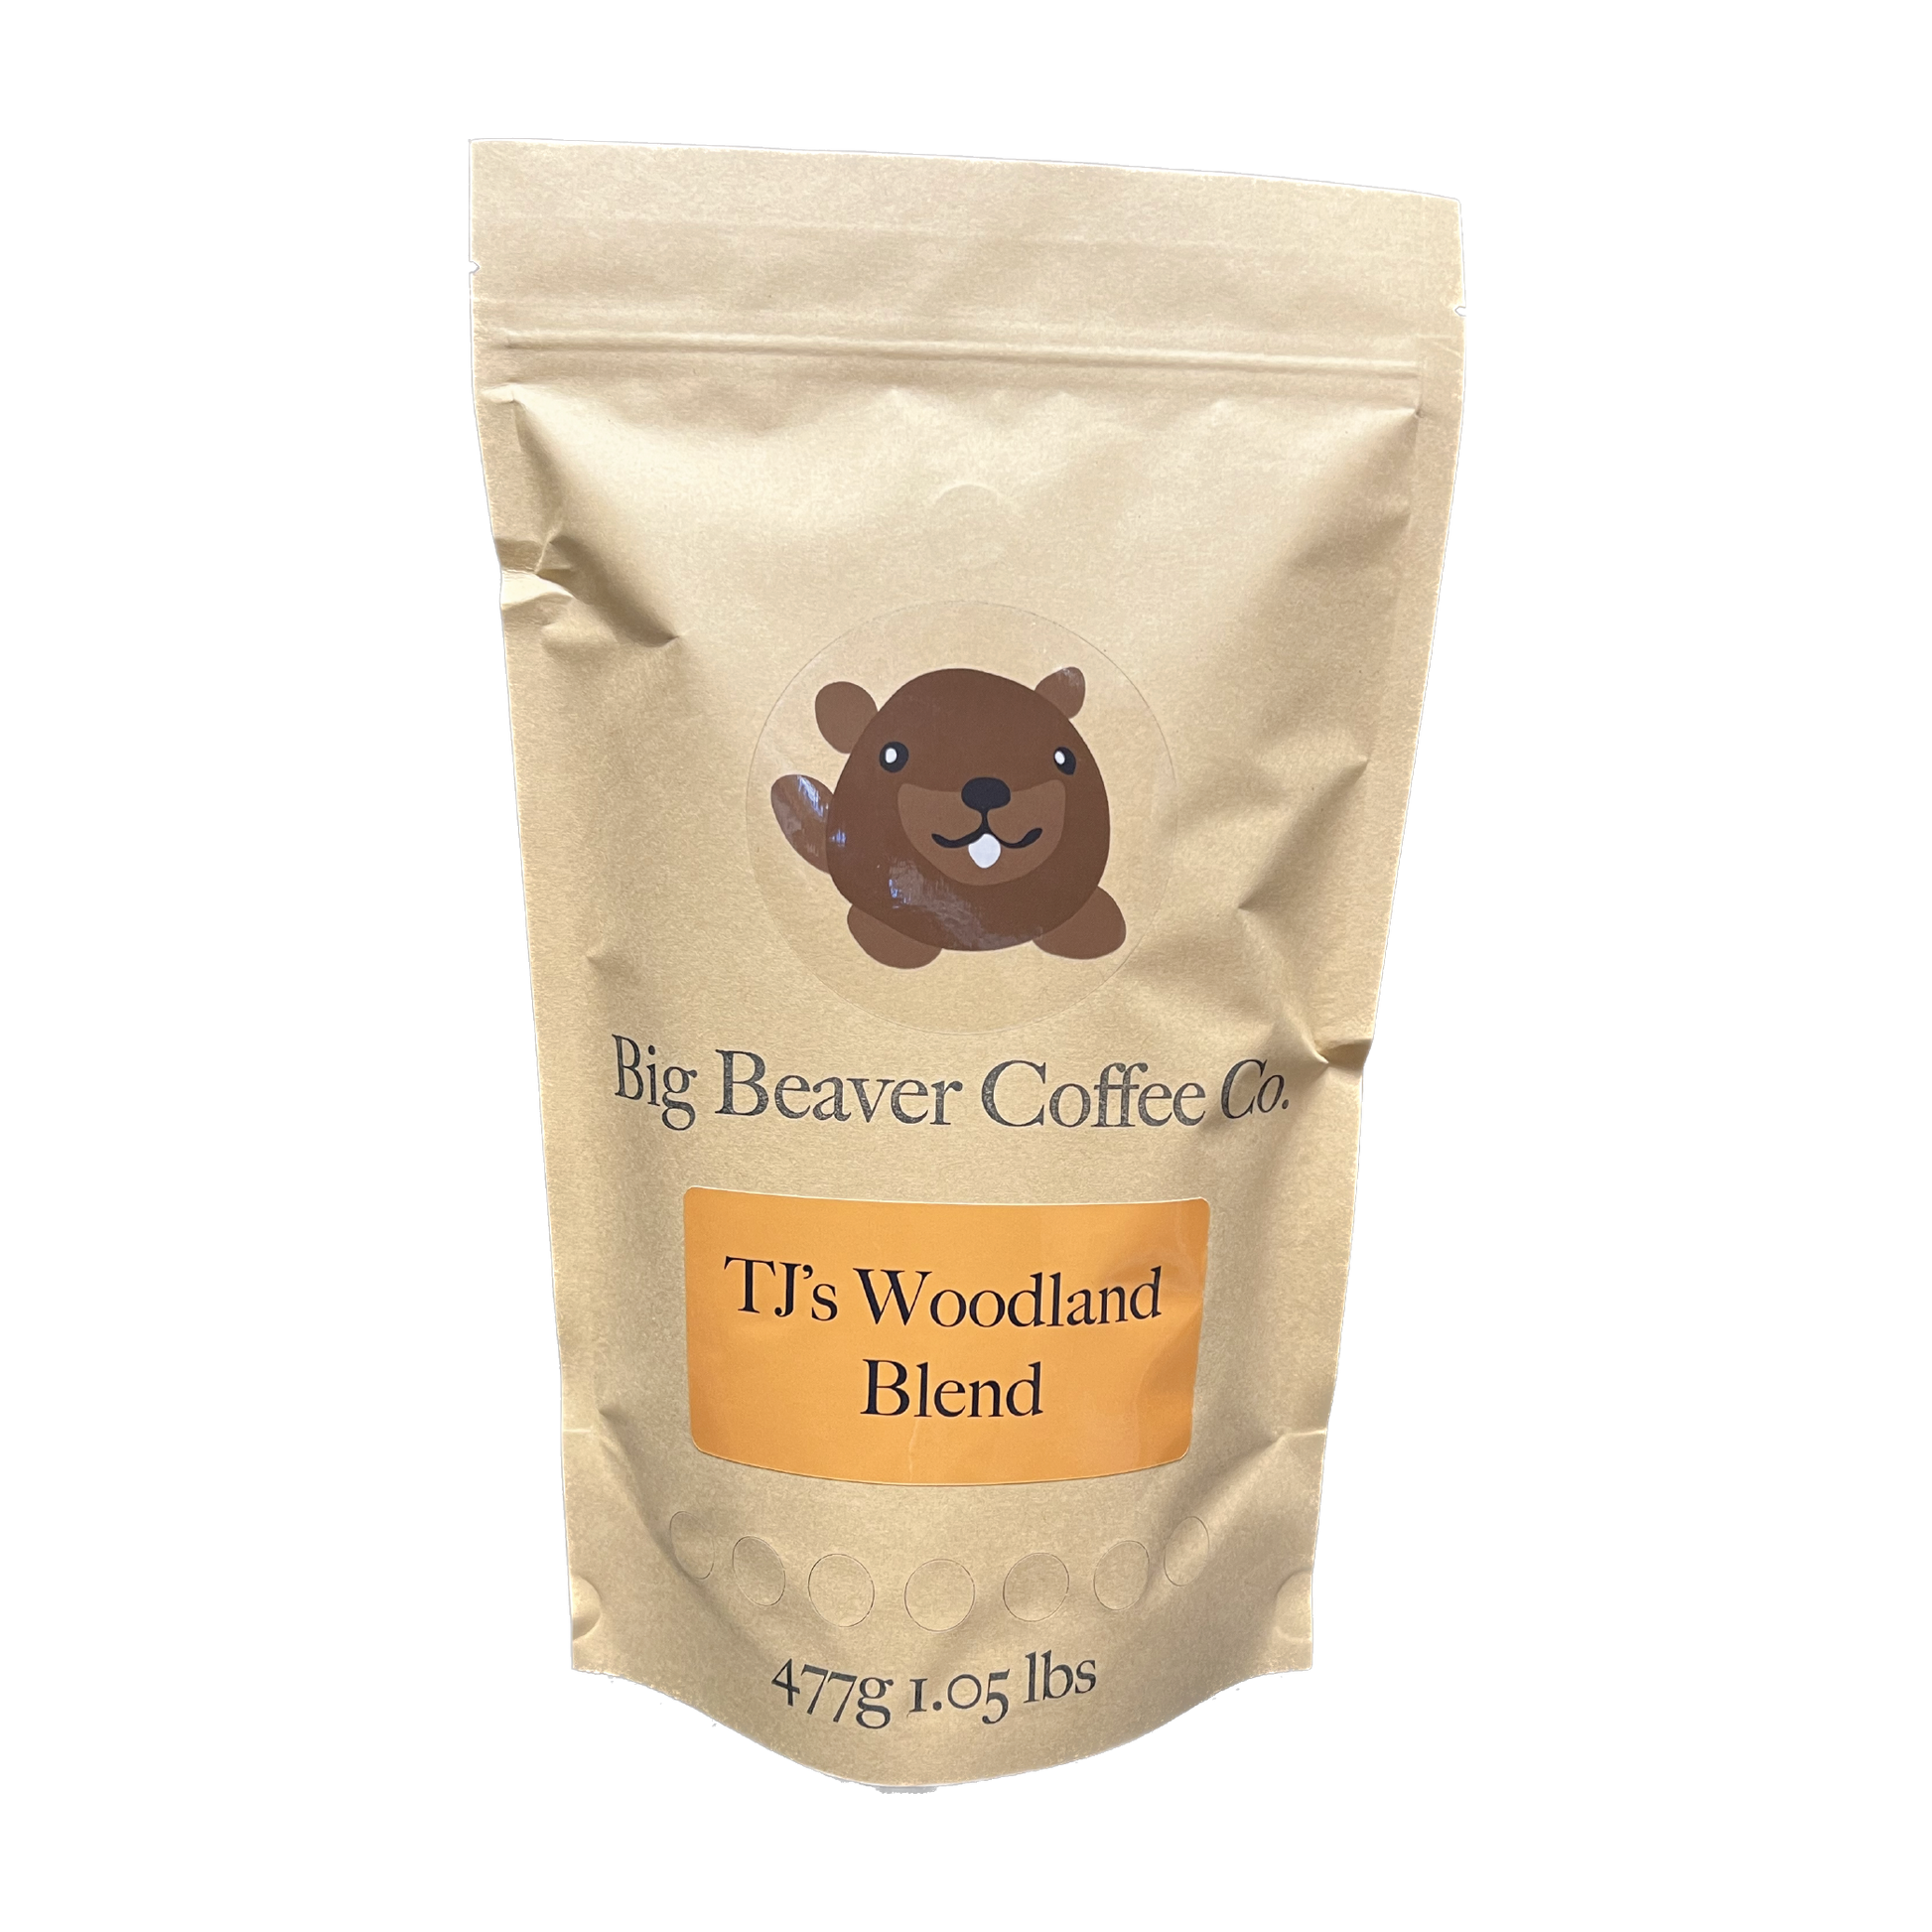 Big Beaver Coffee, Small Batch Roasting, Fluid Bed Roasting, Coffee Blends, TJ's Woodland Blend, Whole Bean, Ground Coffee.